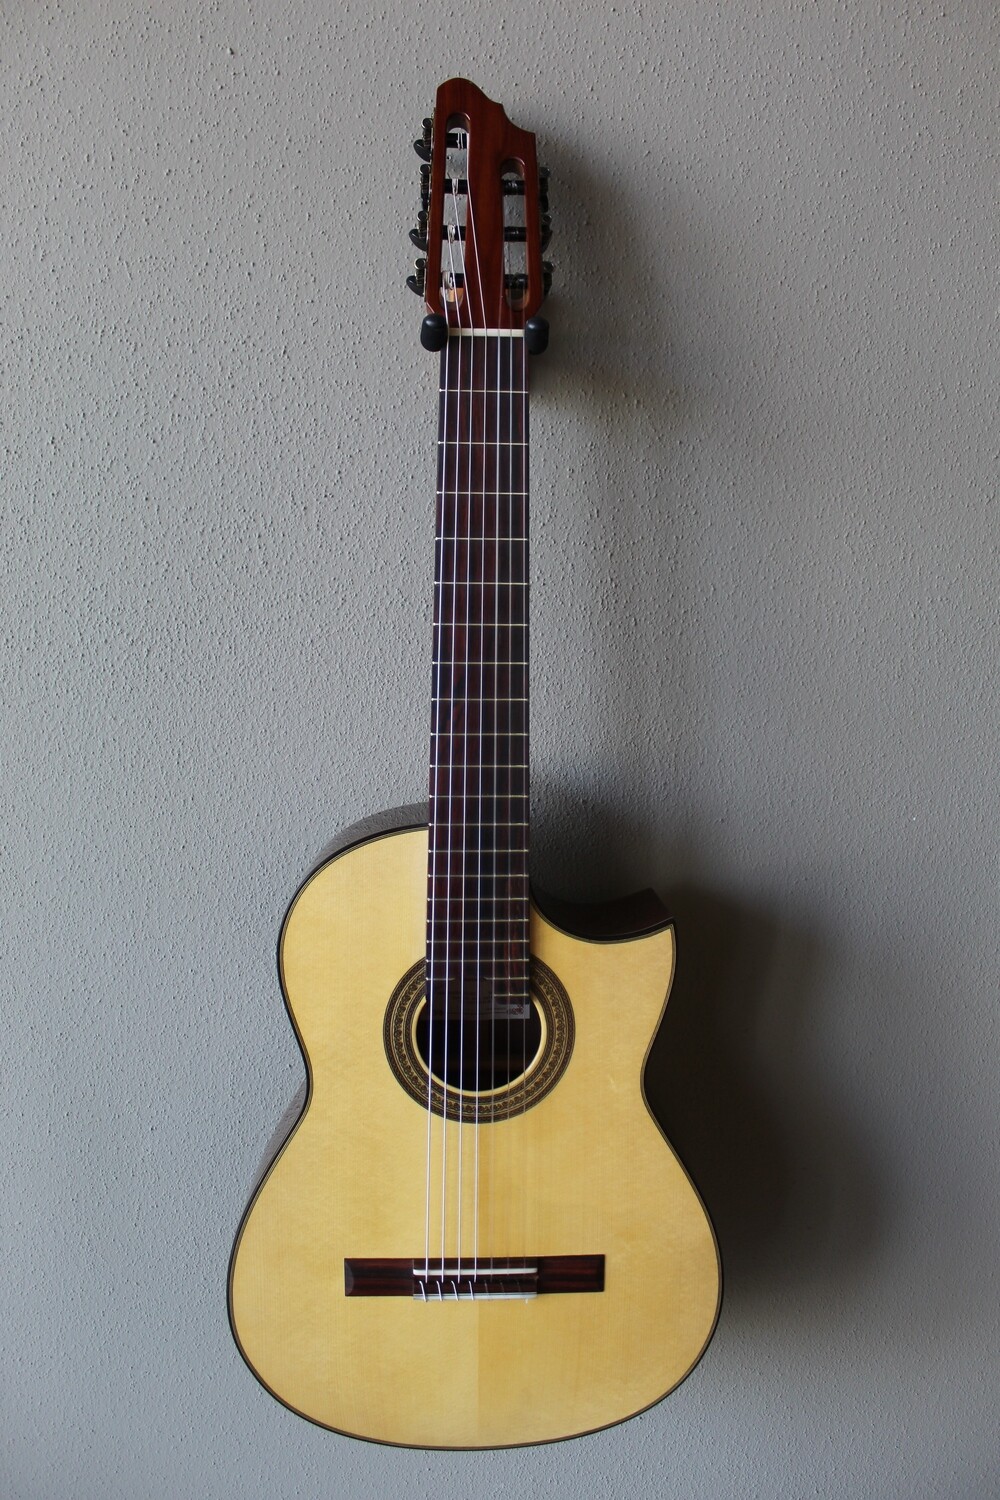 Yamaha FG820-12 12 (Twelve) String Acoustic Guitar with Gig Bag